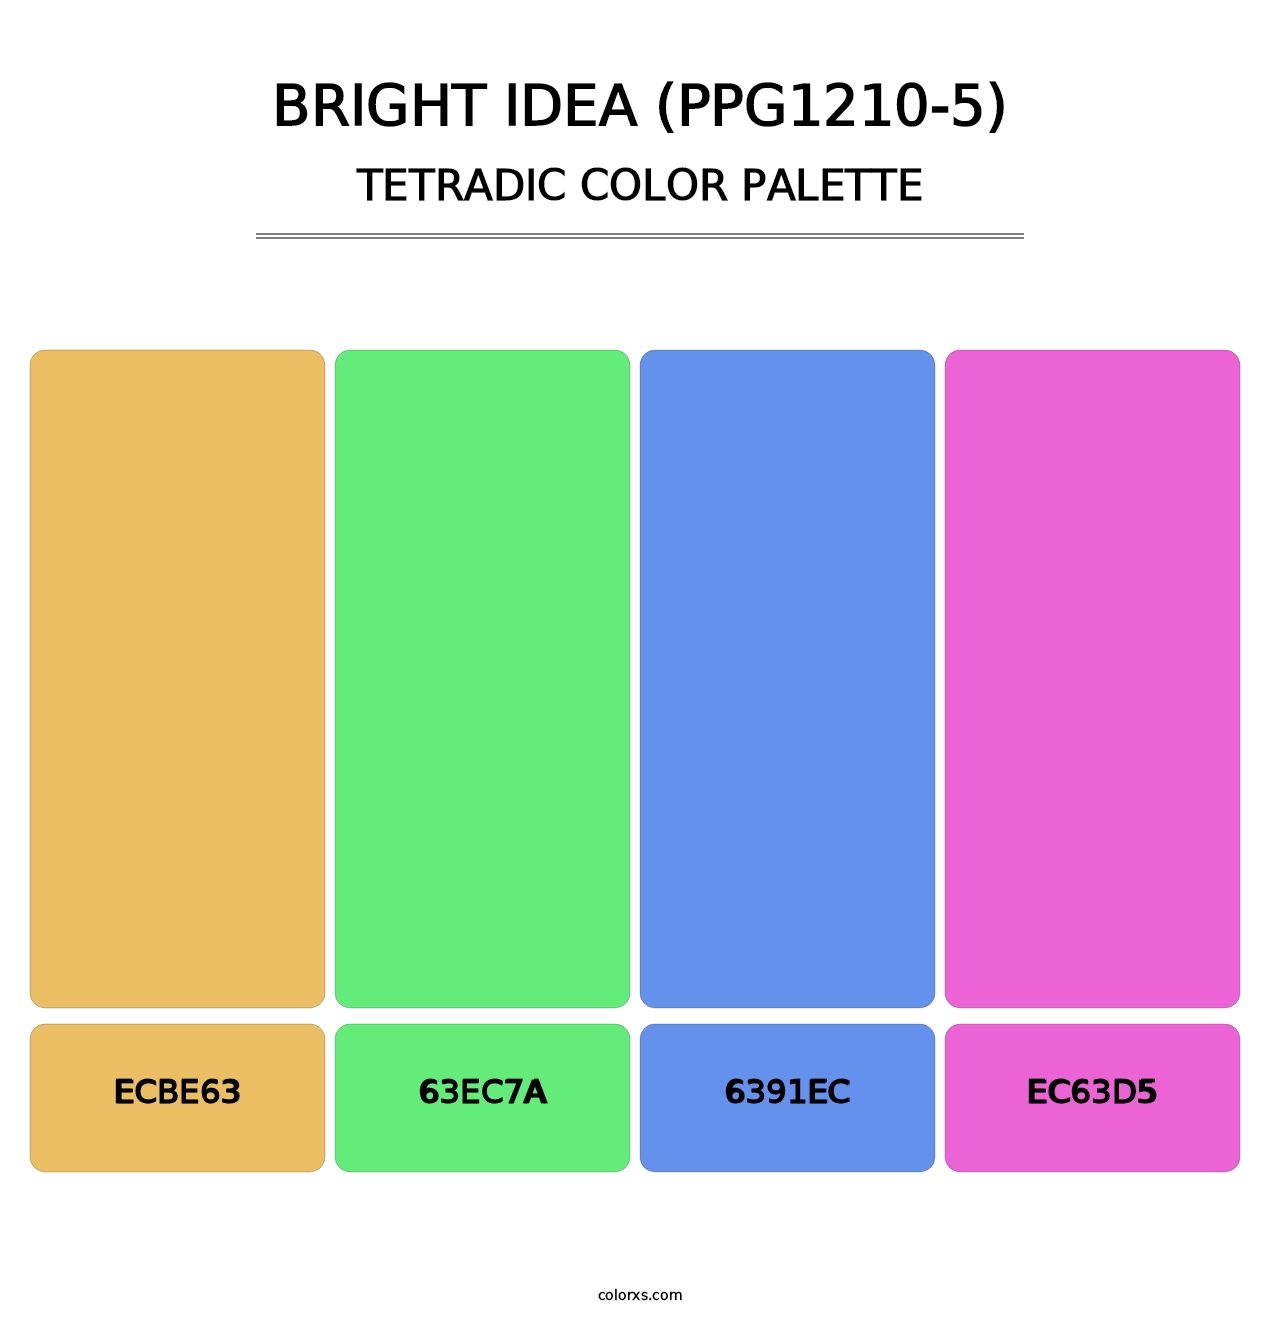 Bright Idea (PPG1210-5) - Tetradic Color Palette